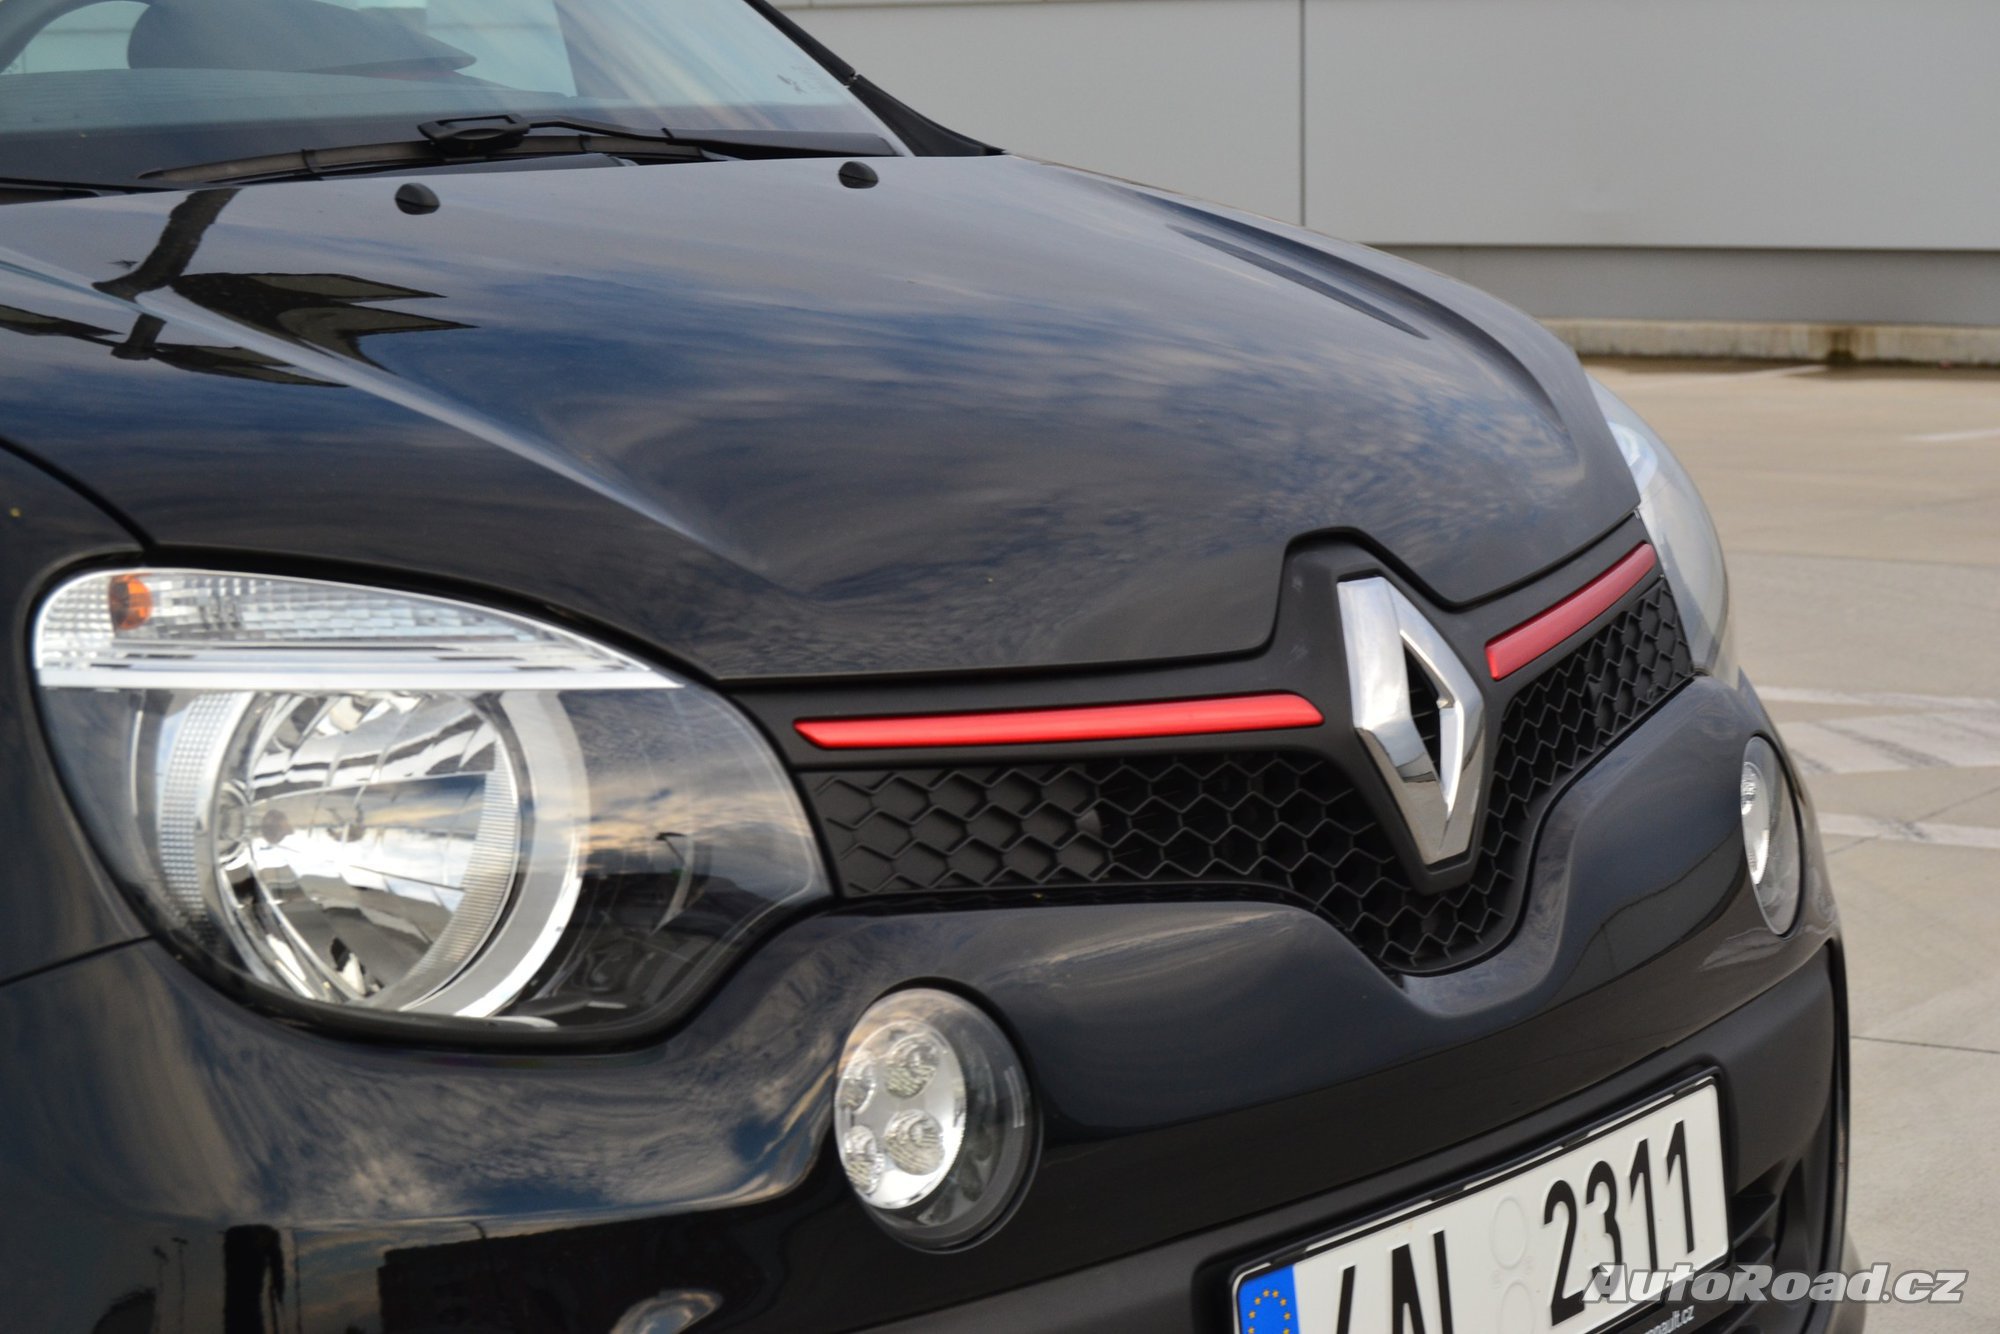 Renault Twingo 0,9 TCe